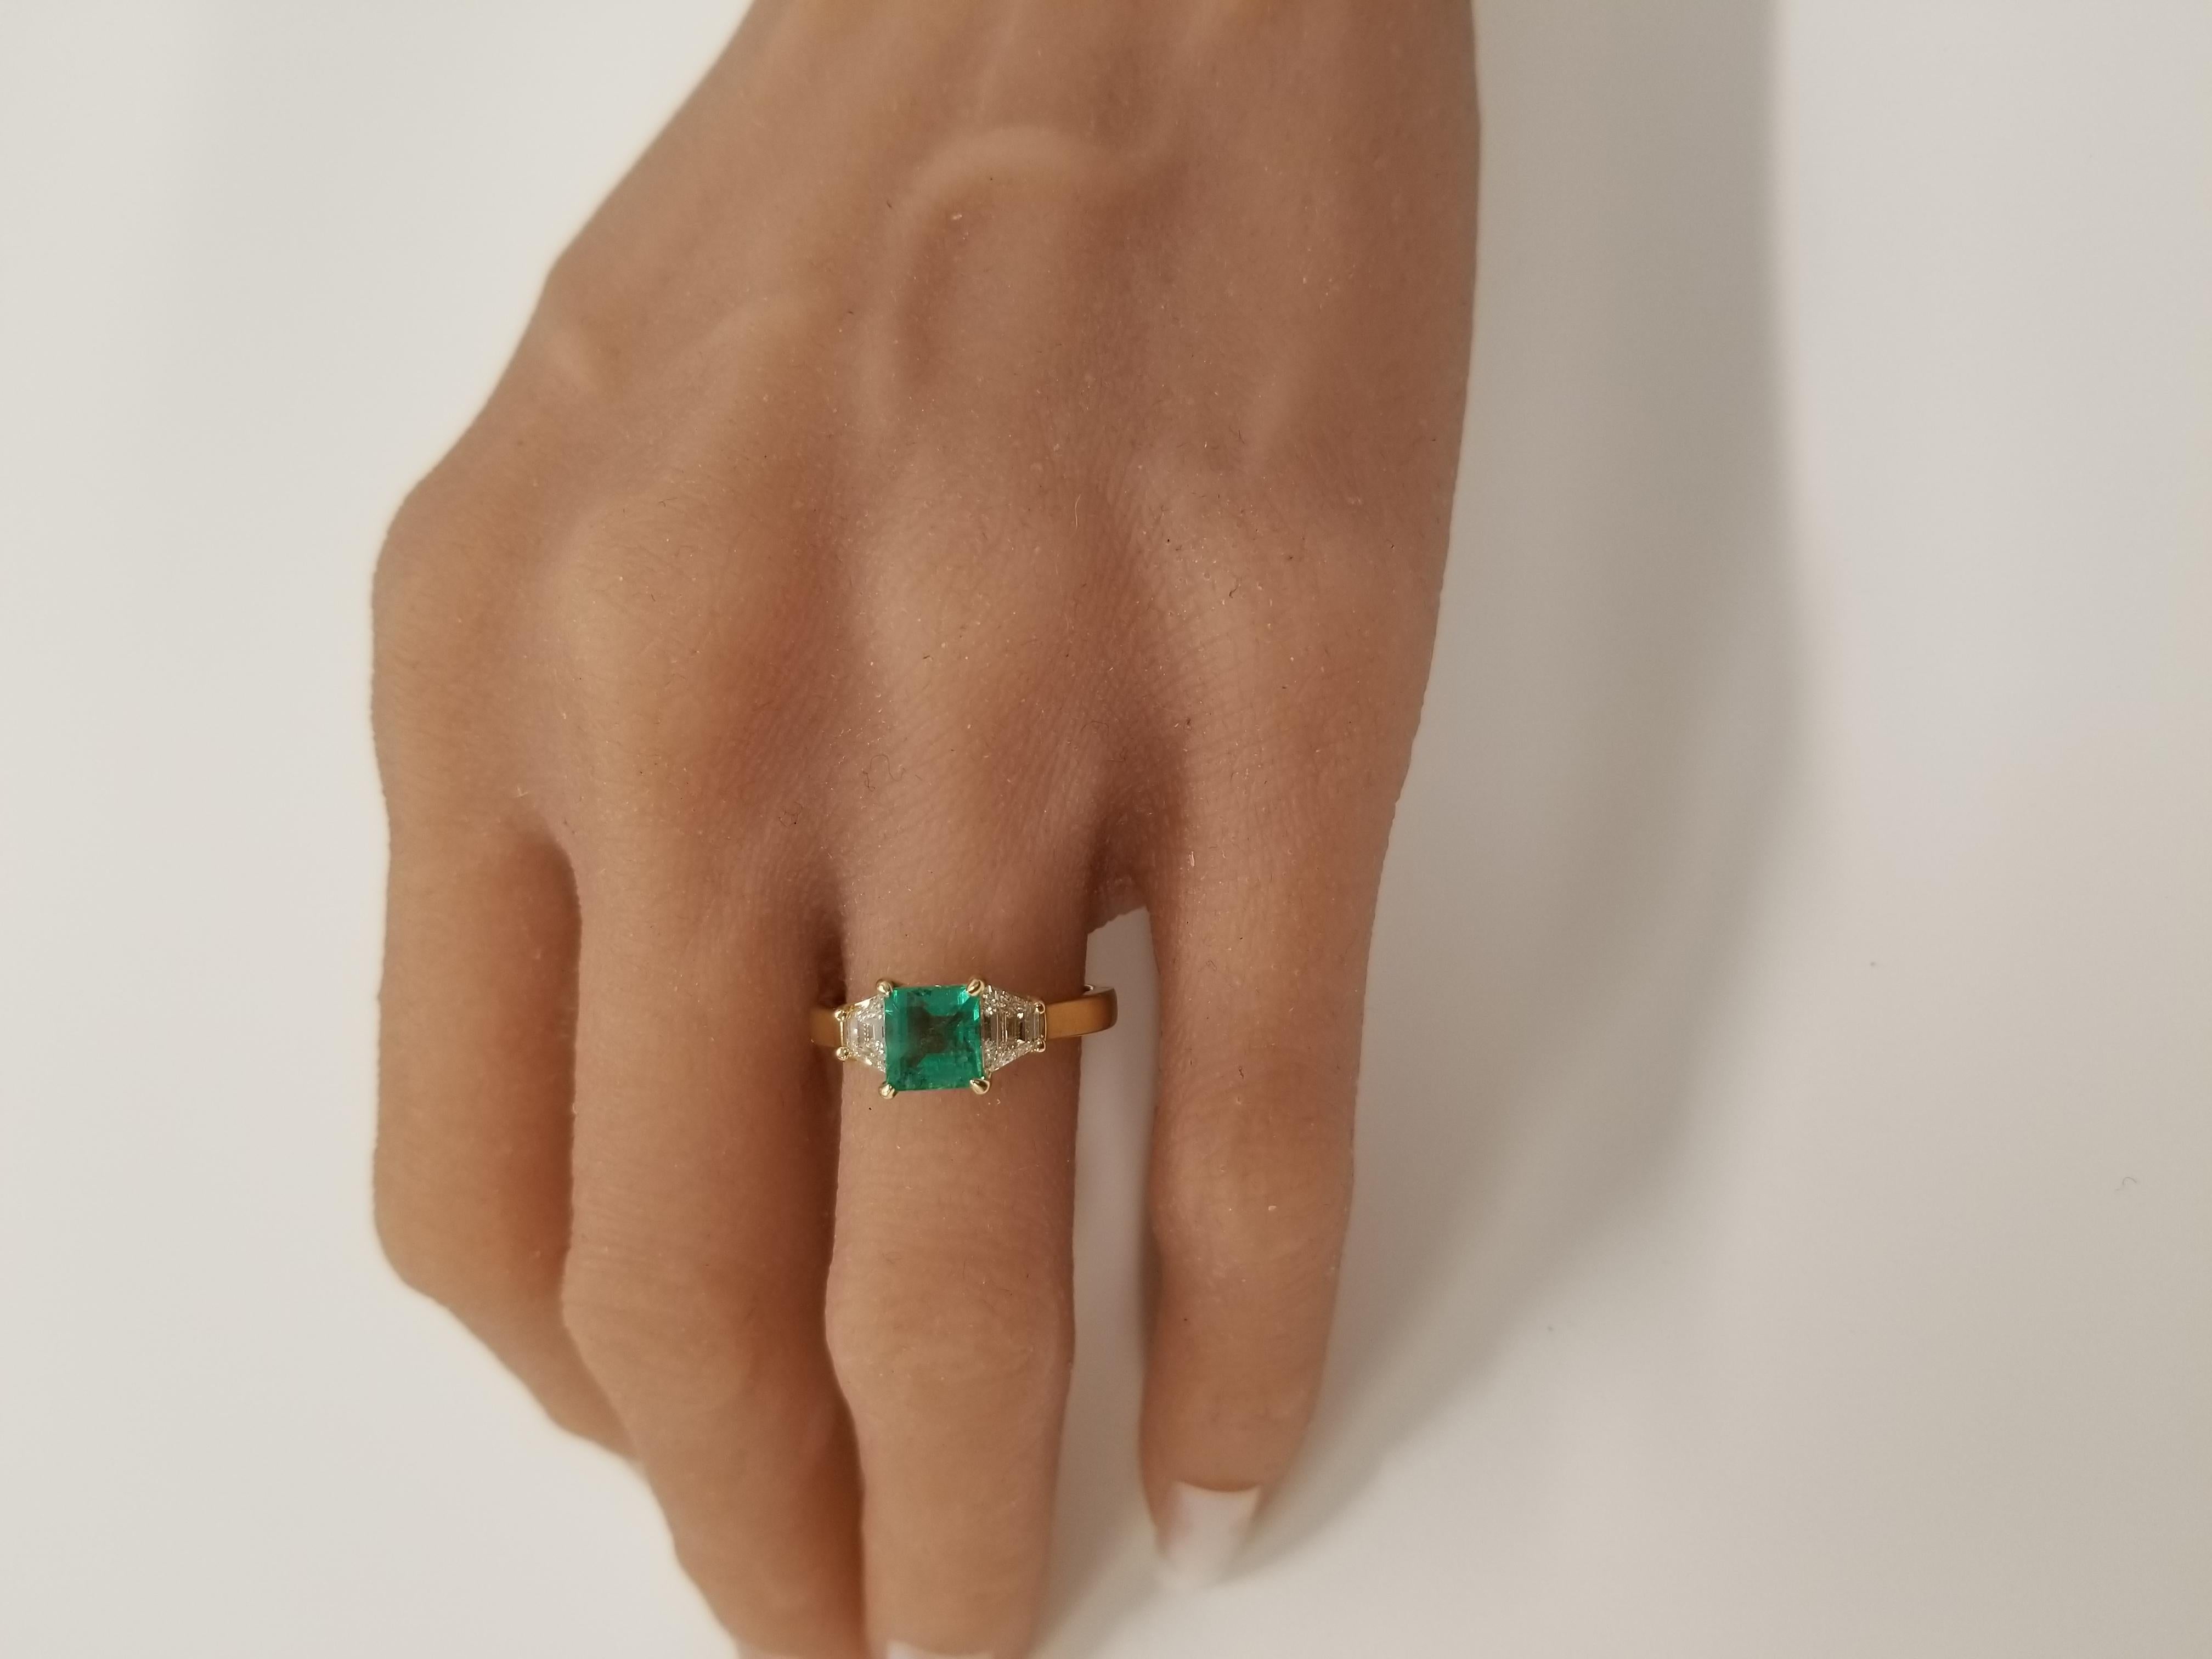 Contemporary 1.38 Carat Emerald Cut Emerald and Diamond Cocktail Ring in 18 Karat Gold